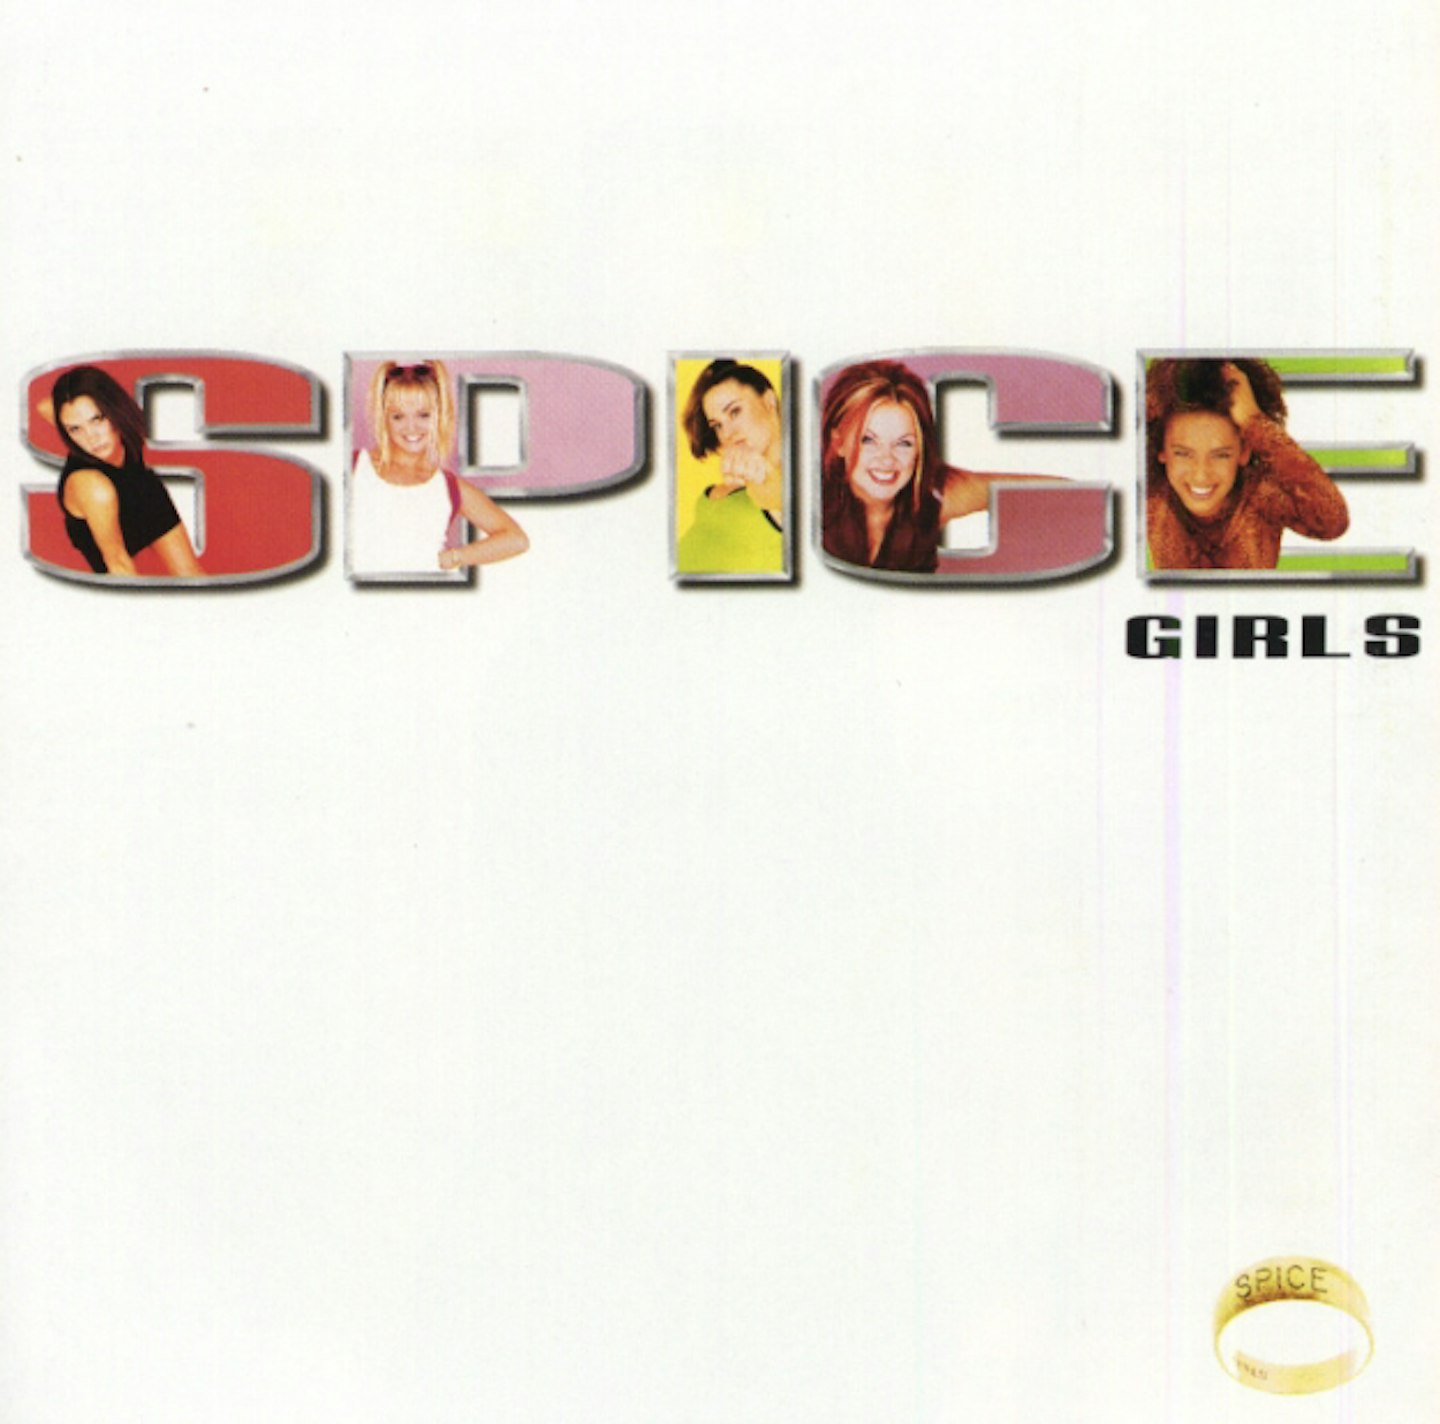 spice girls album